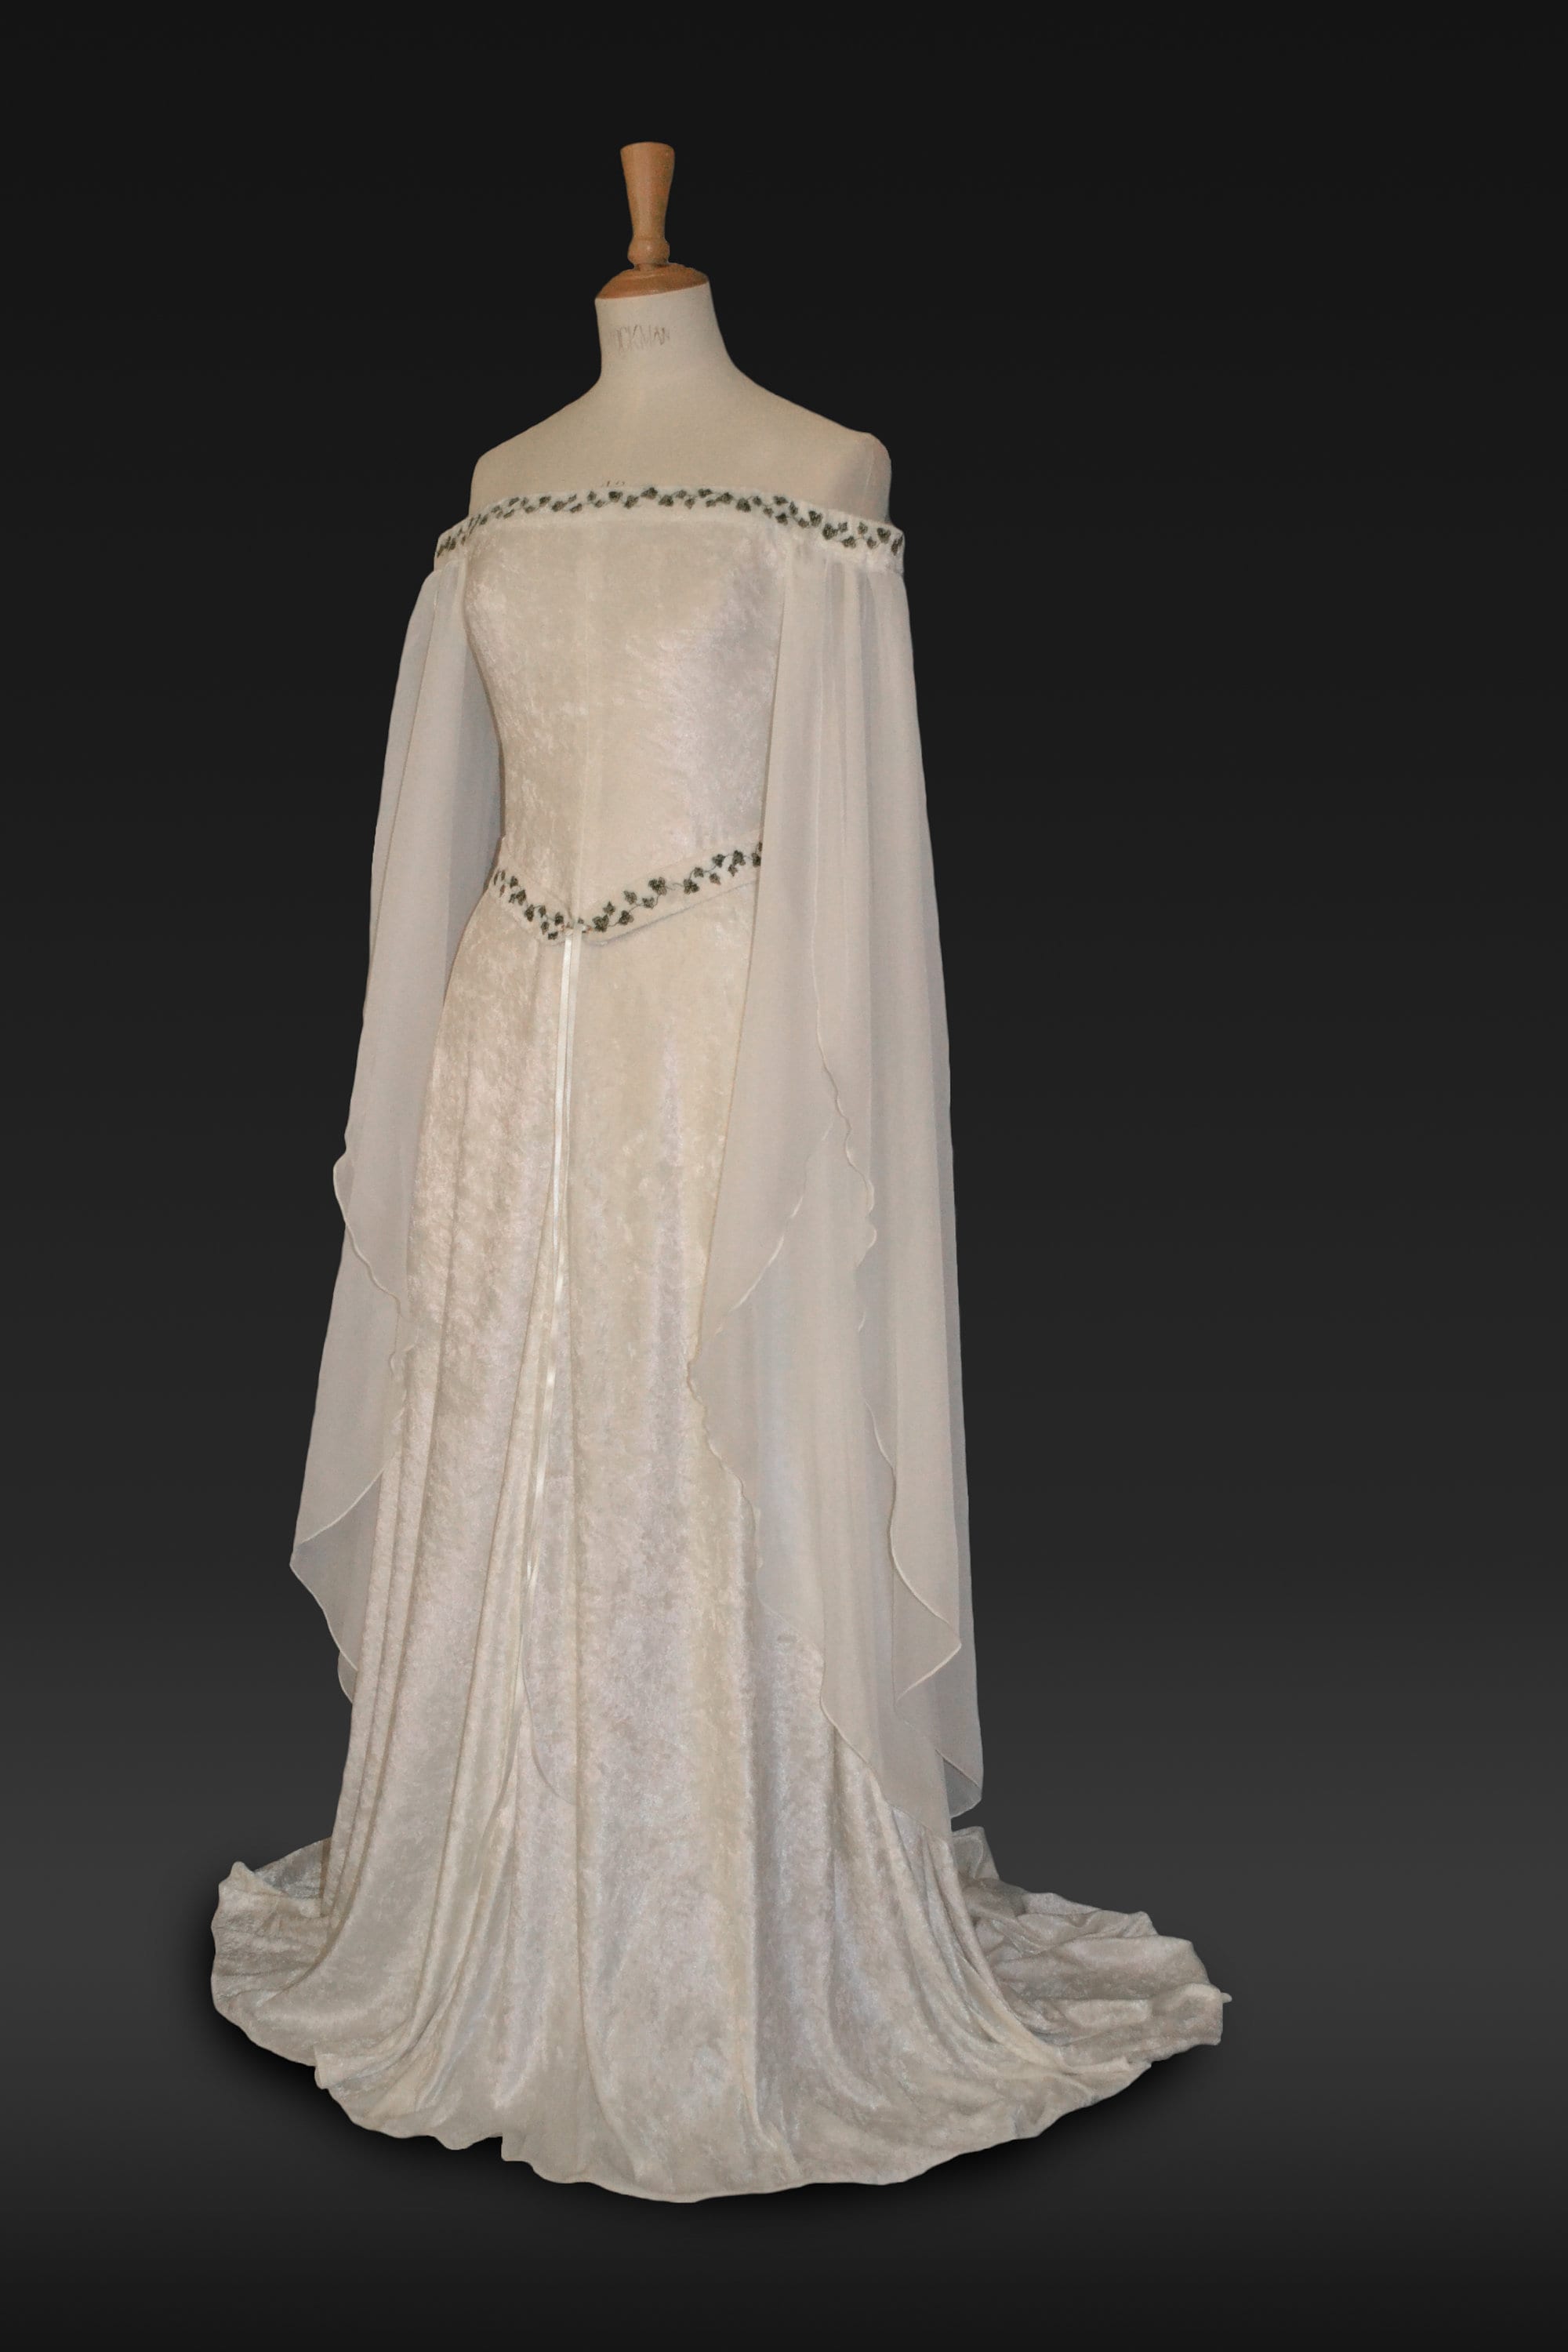 elvish medieval wedding dress,